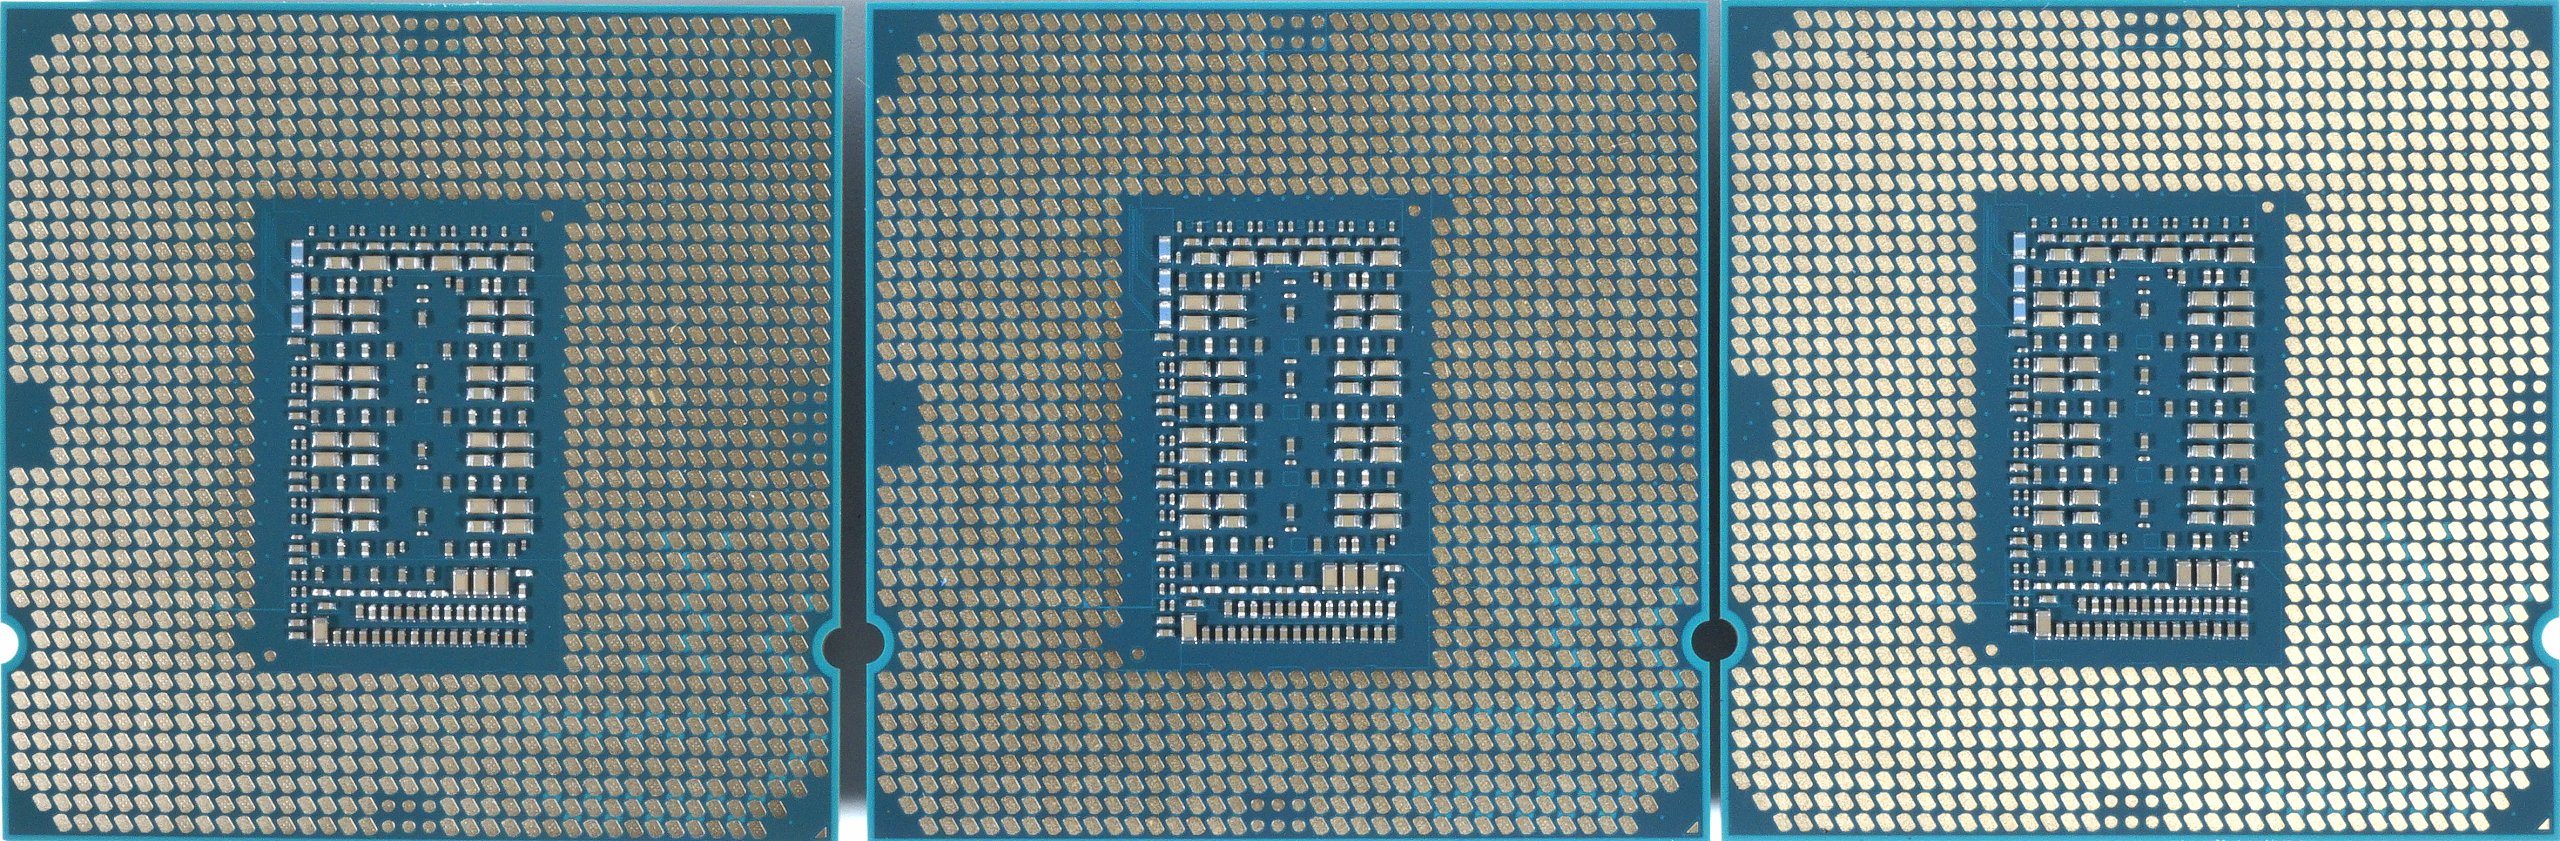 Intel's Core i7-11700K 'Rocket Lake' Delidded: A Big Die, Revealed